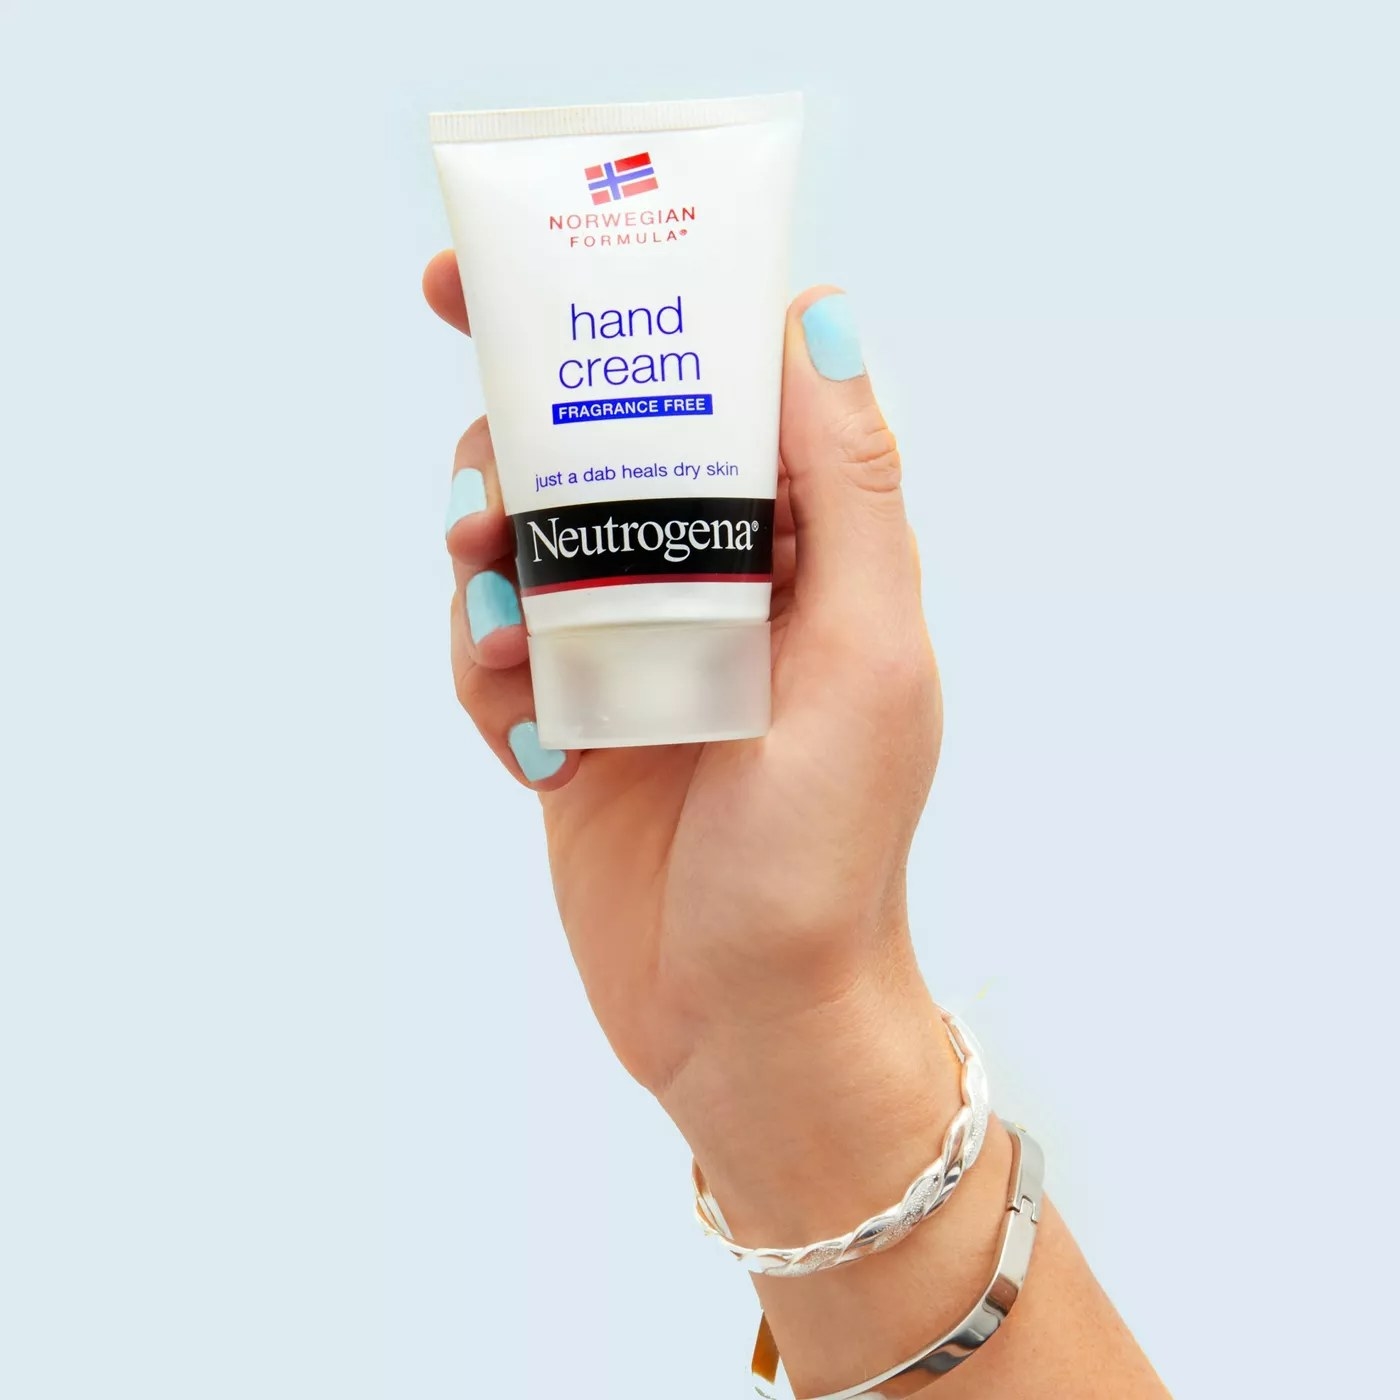 A hand holding up Neutrogena&#x27;s Norwegian formula hand cream